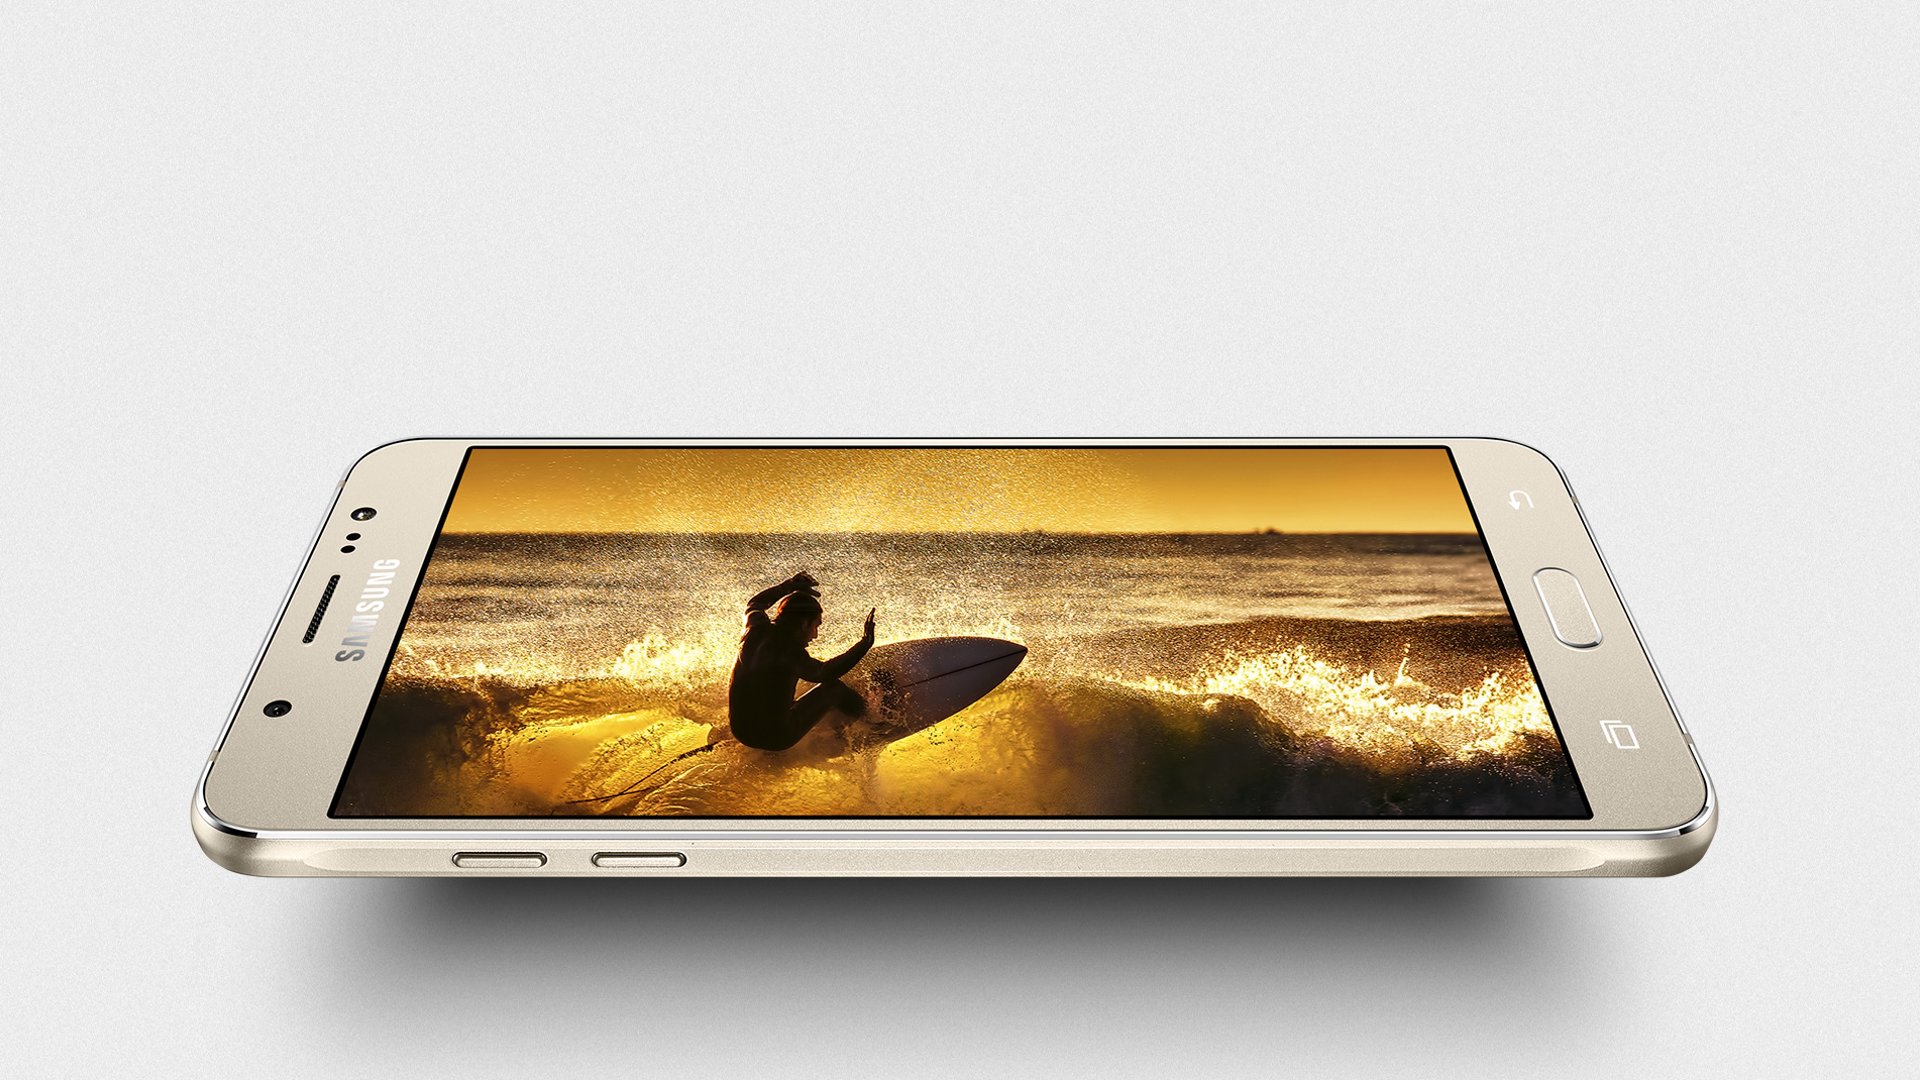 Samsung Galaxy J7 Prime 2016 Model Price - HD Wallpaper 